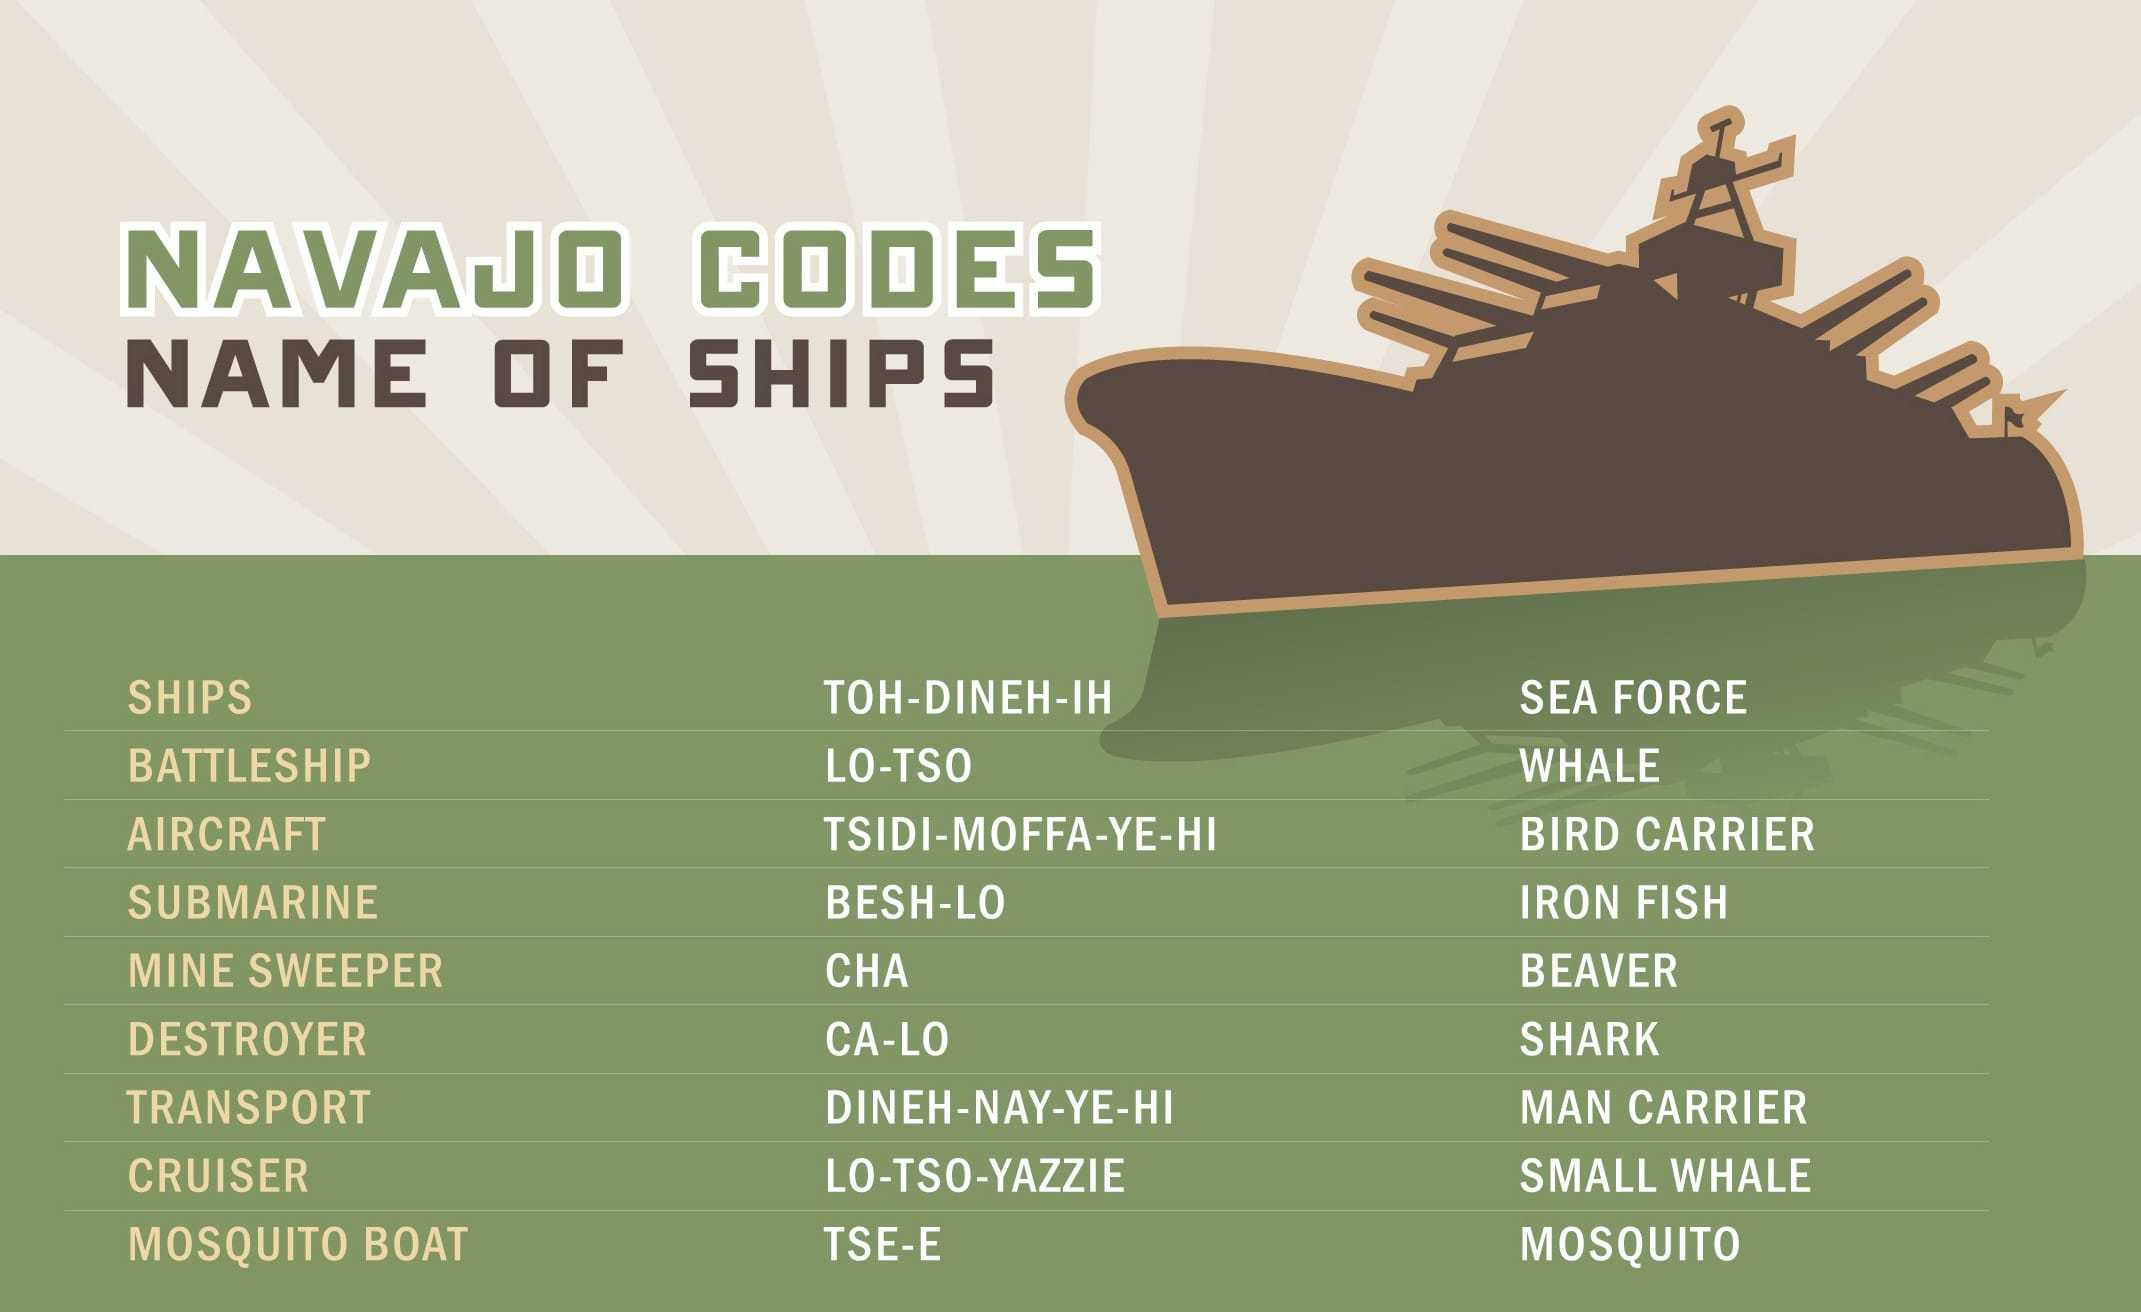 Green poster showing Navajo Codes name of ships.